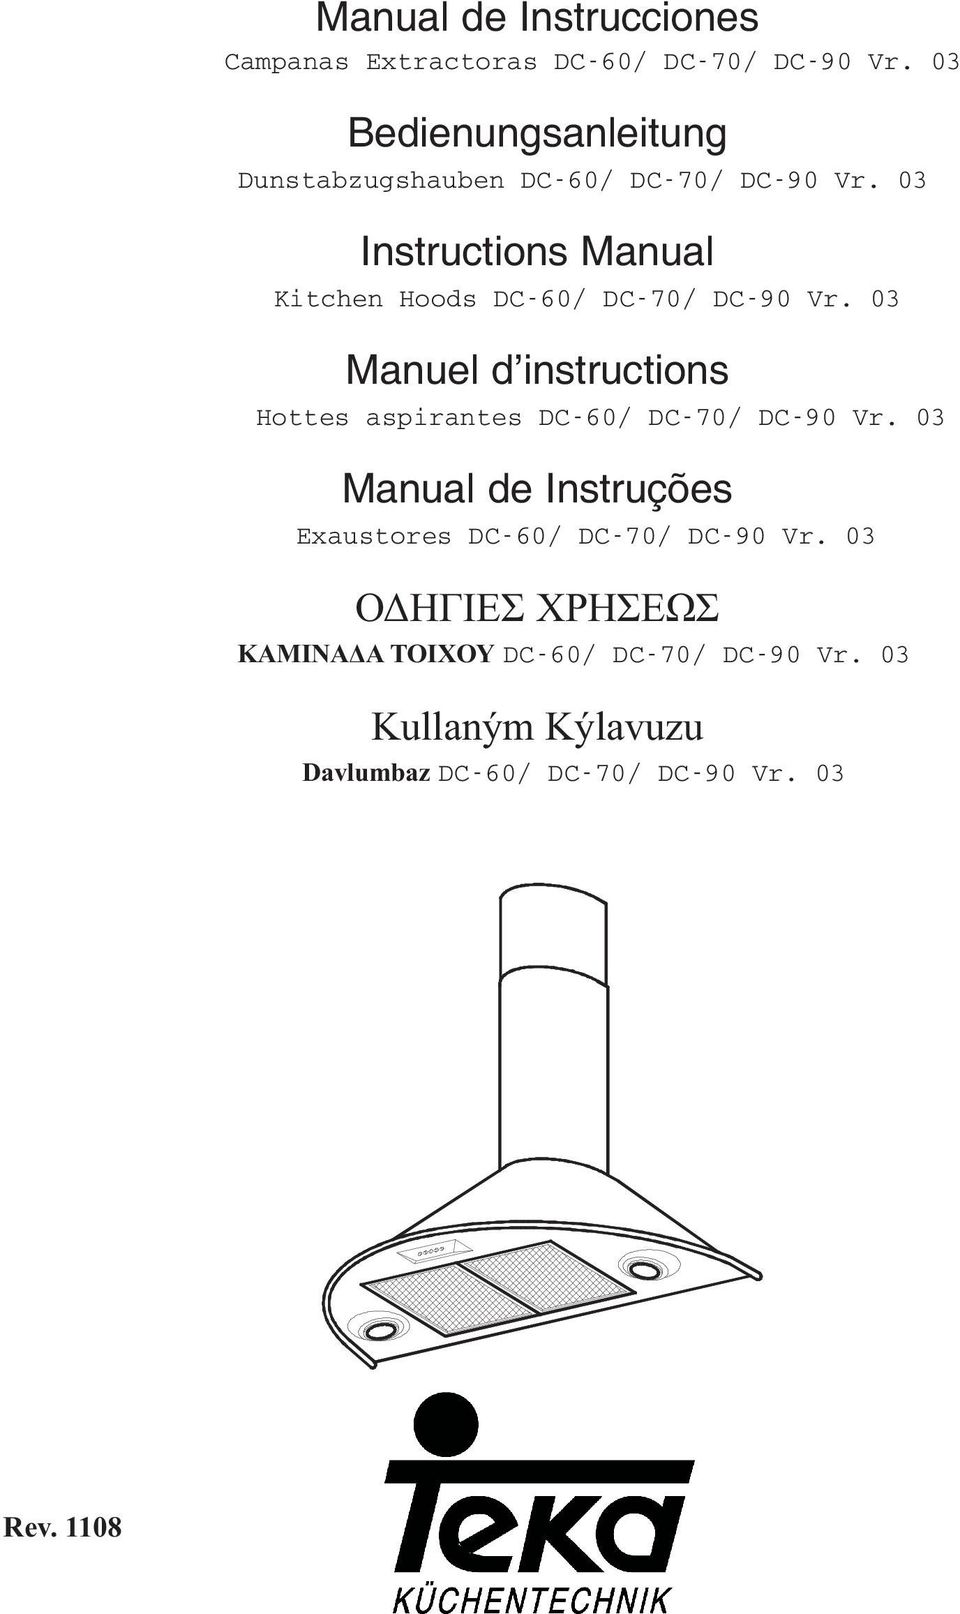 03 Instructions Manual Kitchen Hoods DC-60/ DC-70/ DC-90 Vr.